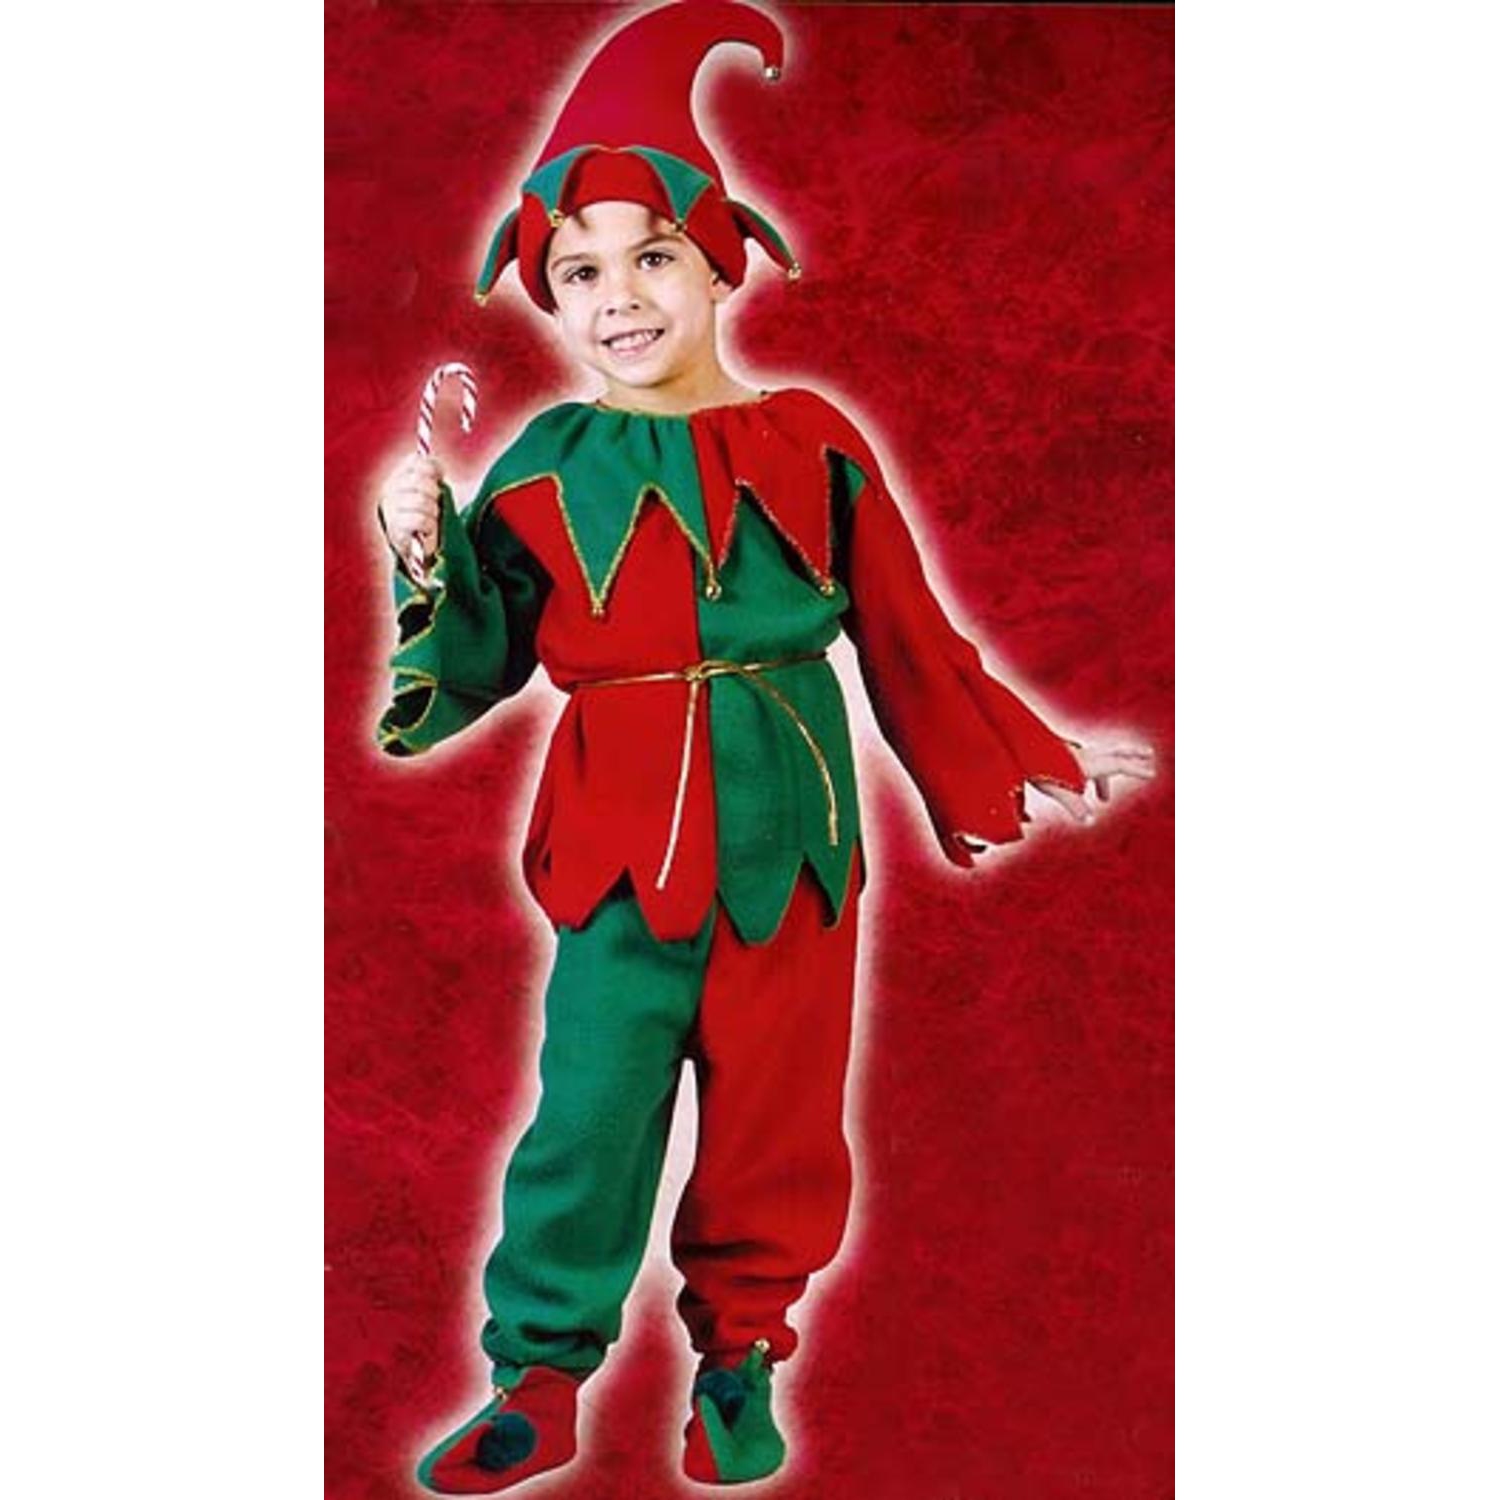 Red and Green Fun Elf Plush Unisex Child Christmas Costume - Medium